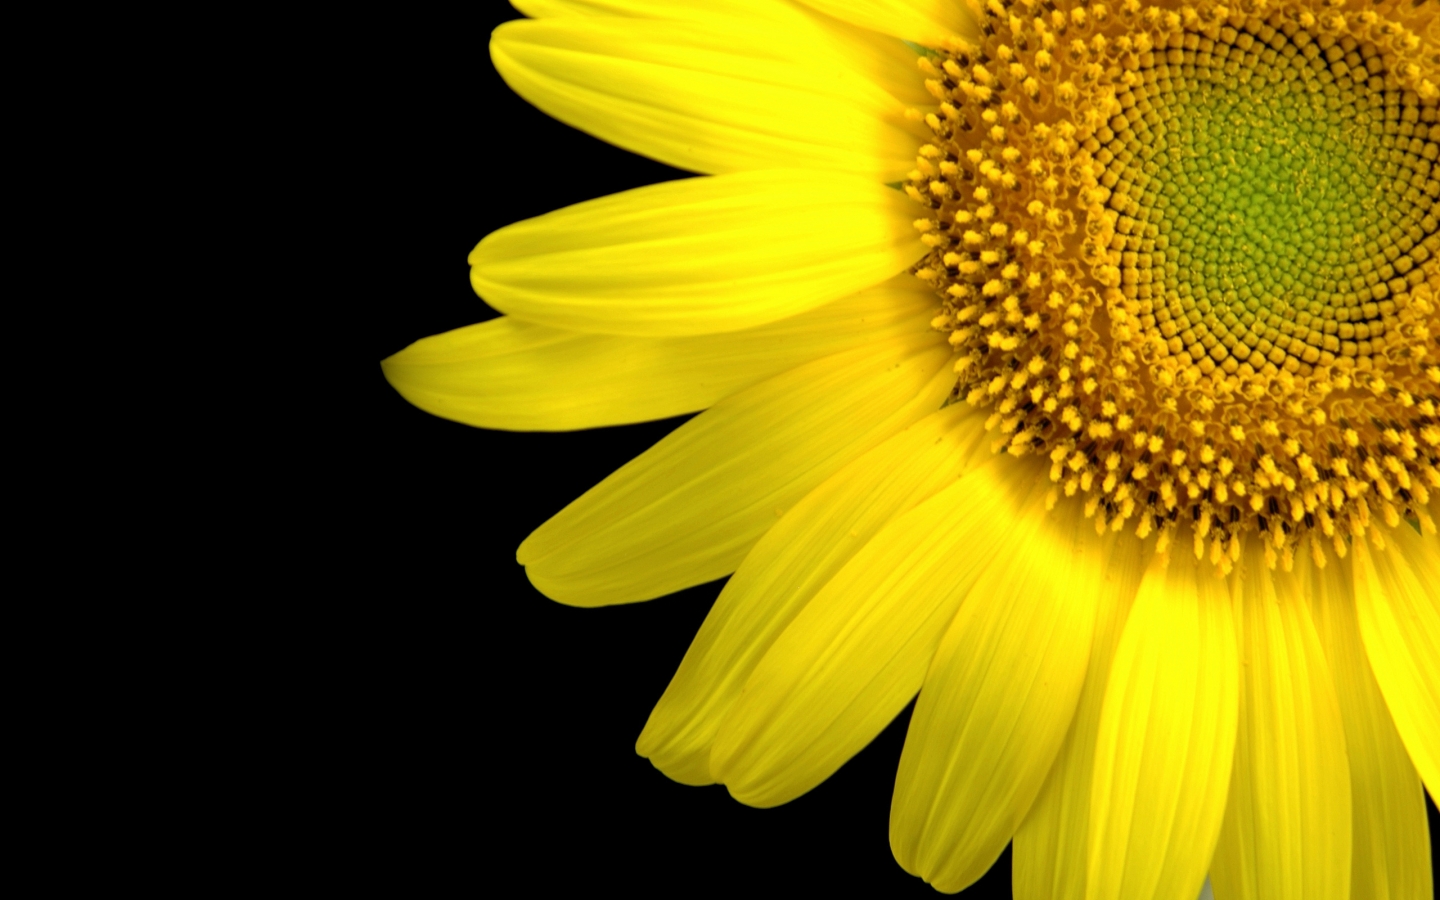 Sunflower Close-Up for 1440 x 900 widescreen resolution